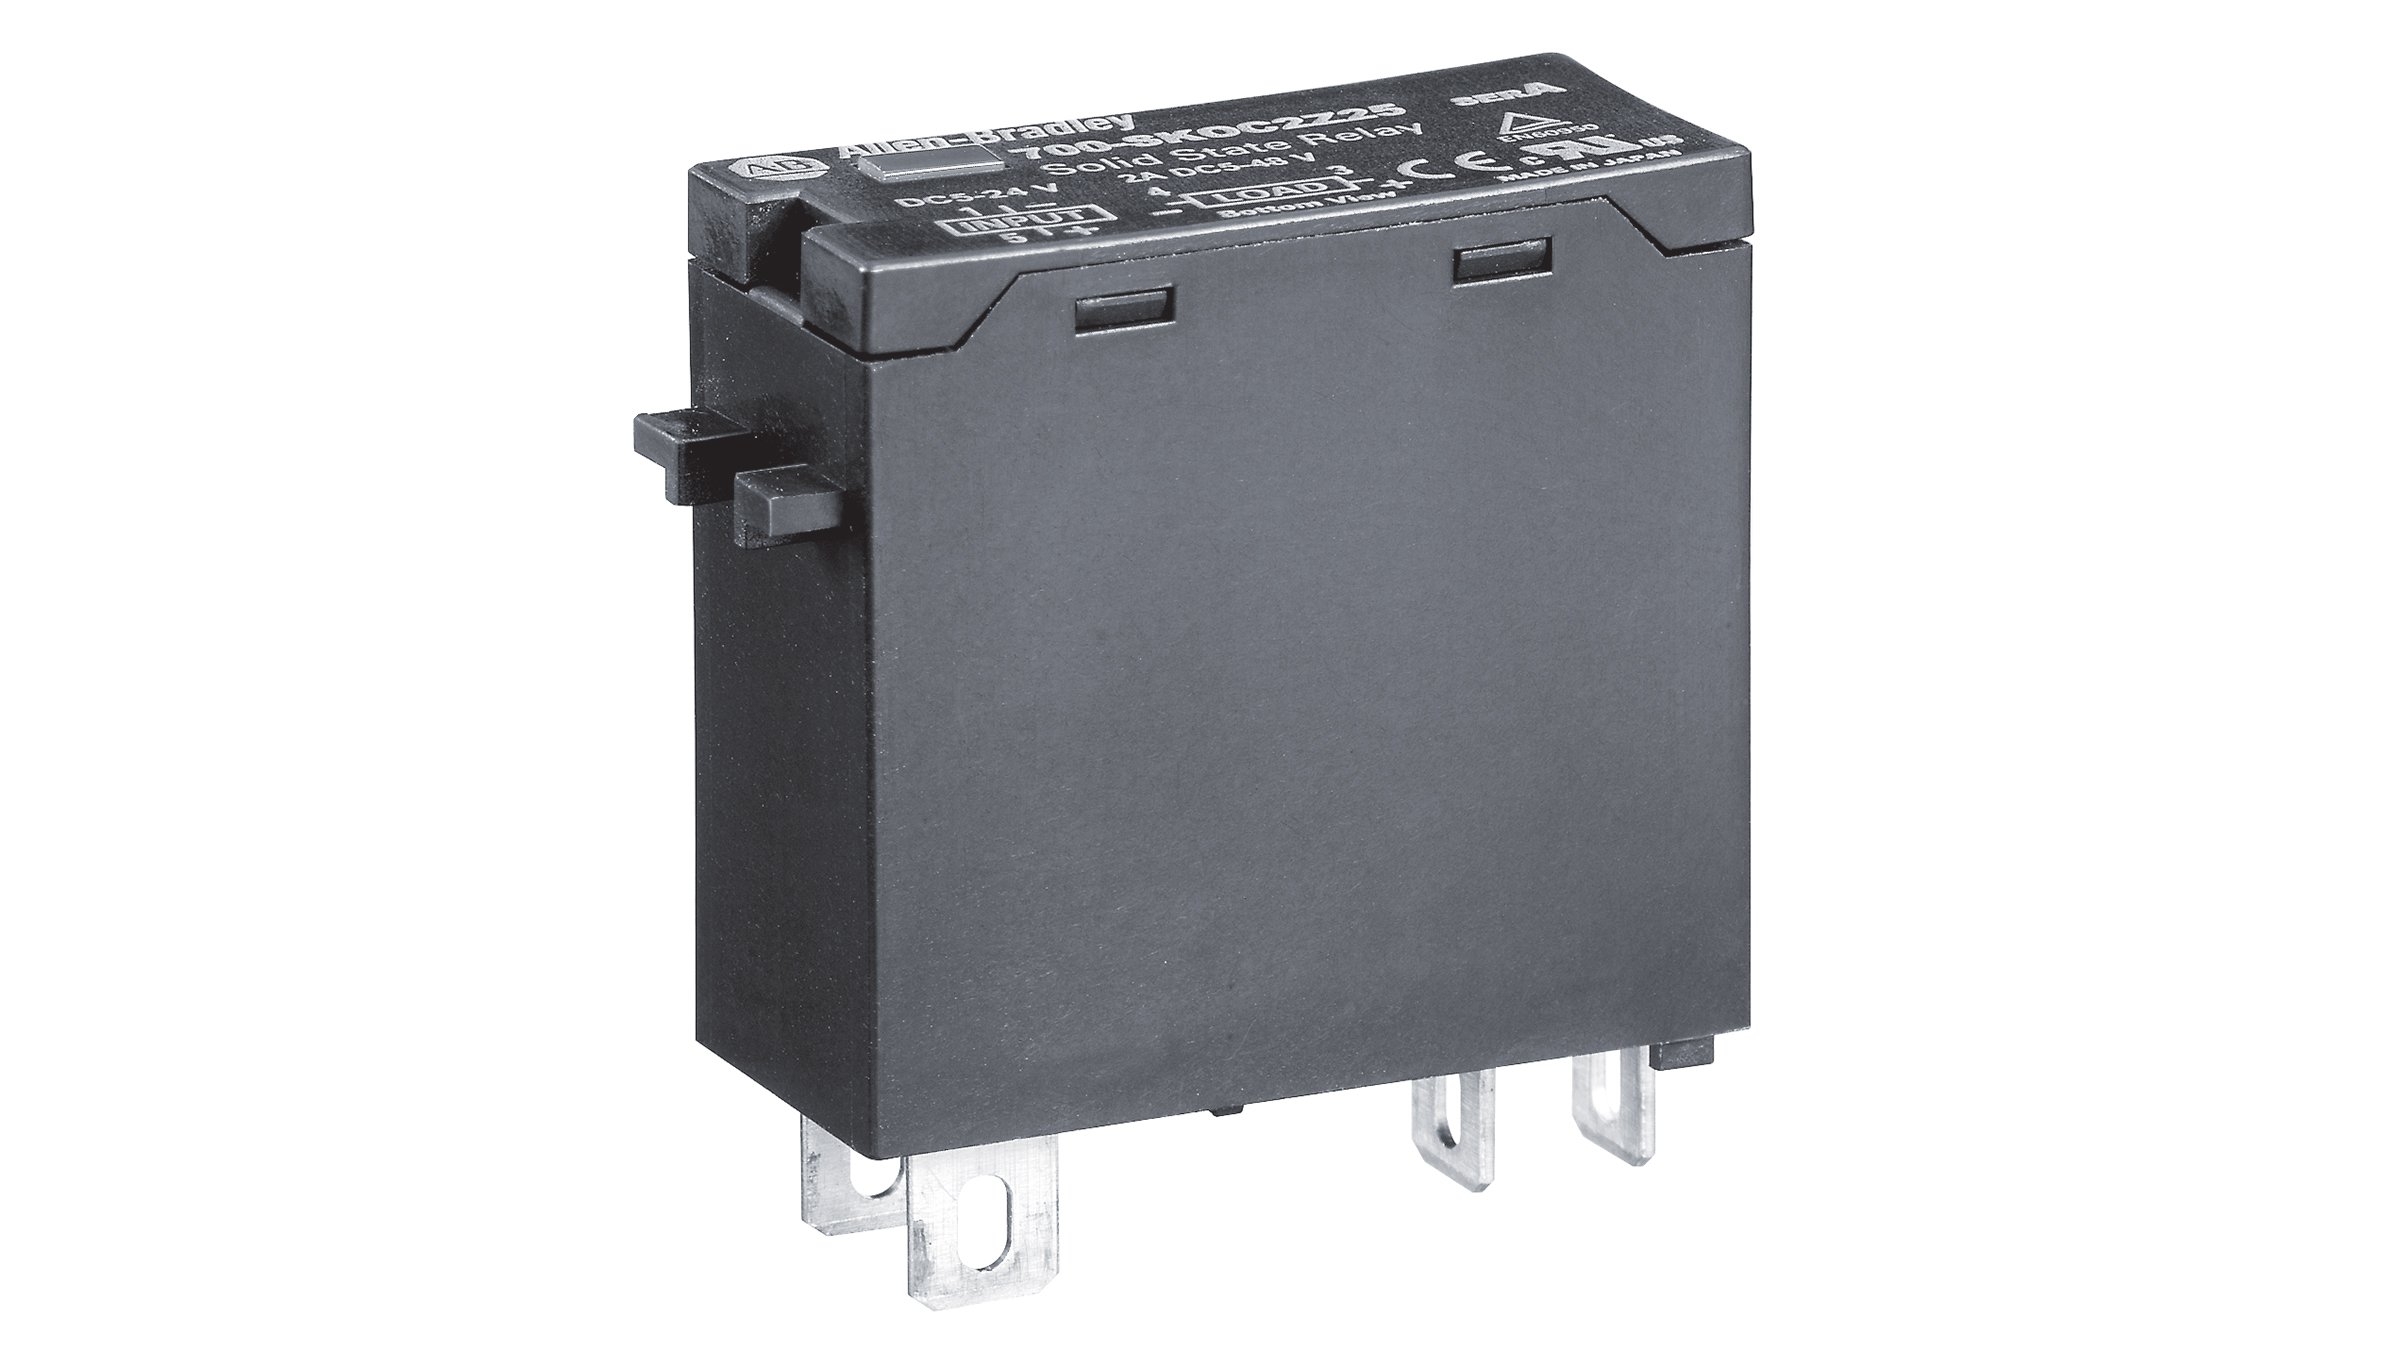 Allen-Bradley Bulletin 700-SK 细长型继电器是与 HN121 或 HN122 插座兼容的固态型继电器